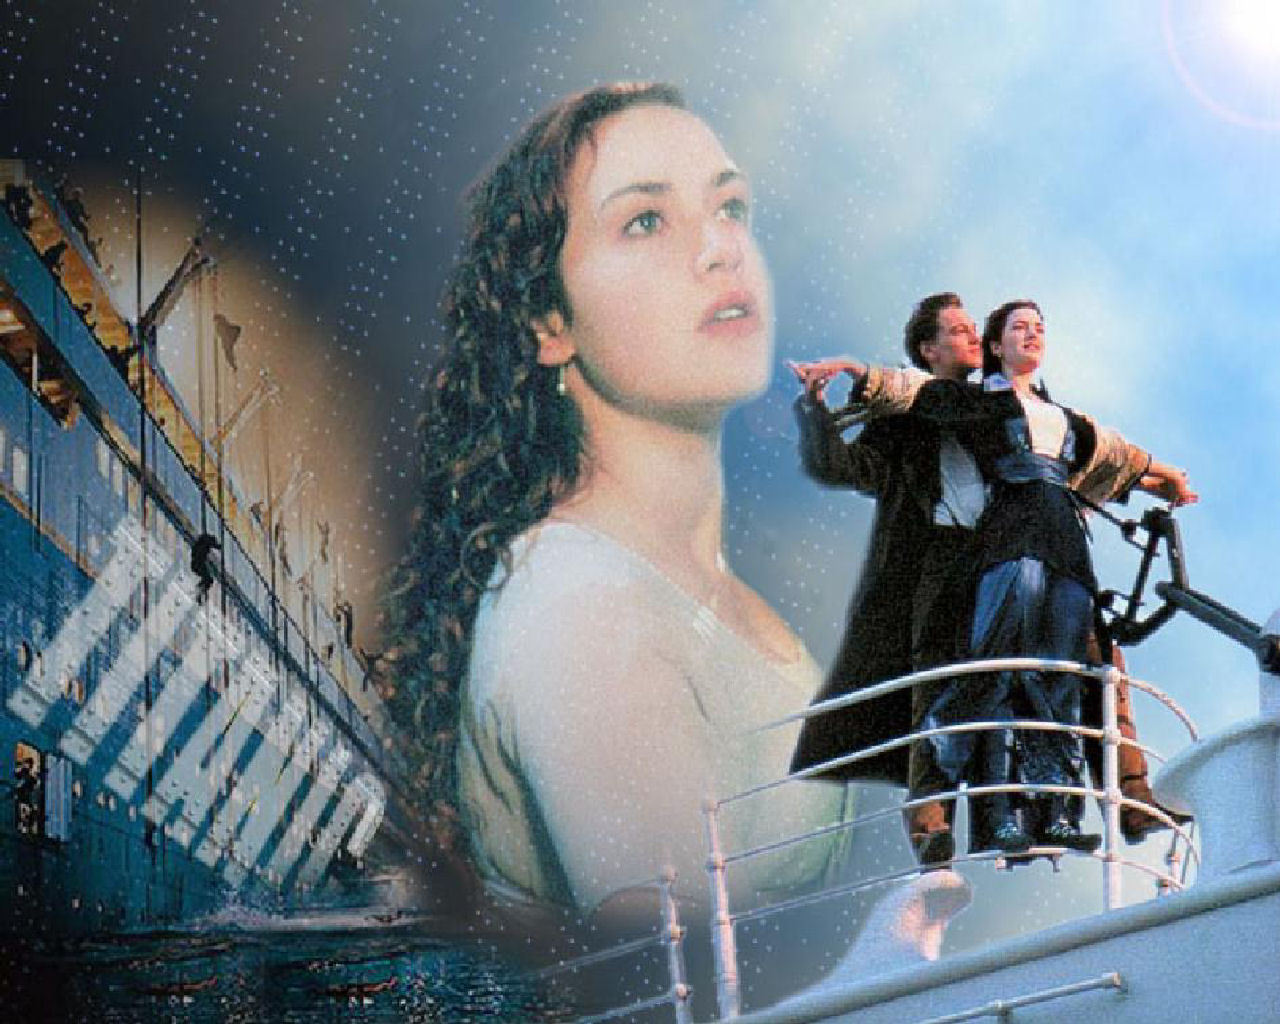 Games Wallpaper Movie Titanic